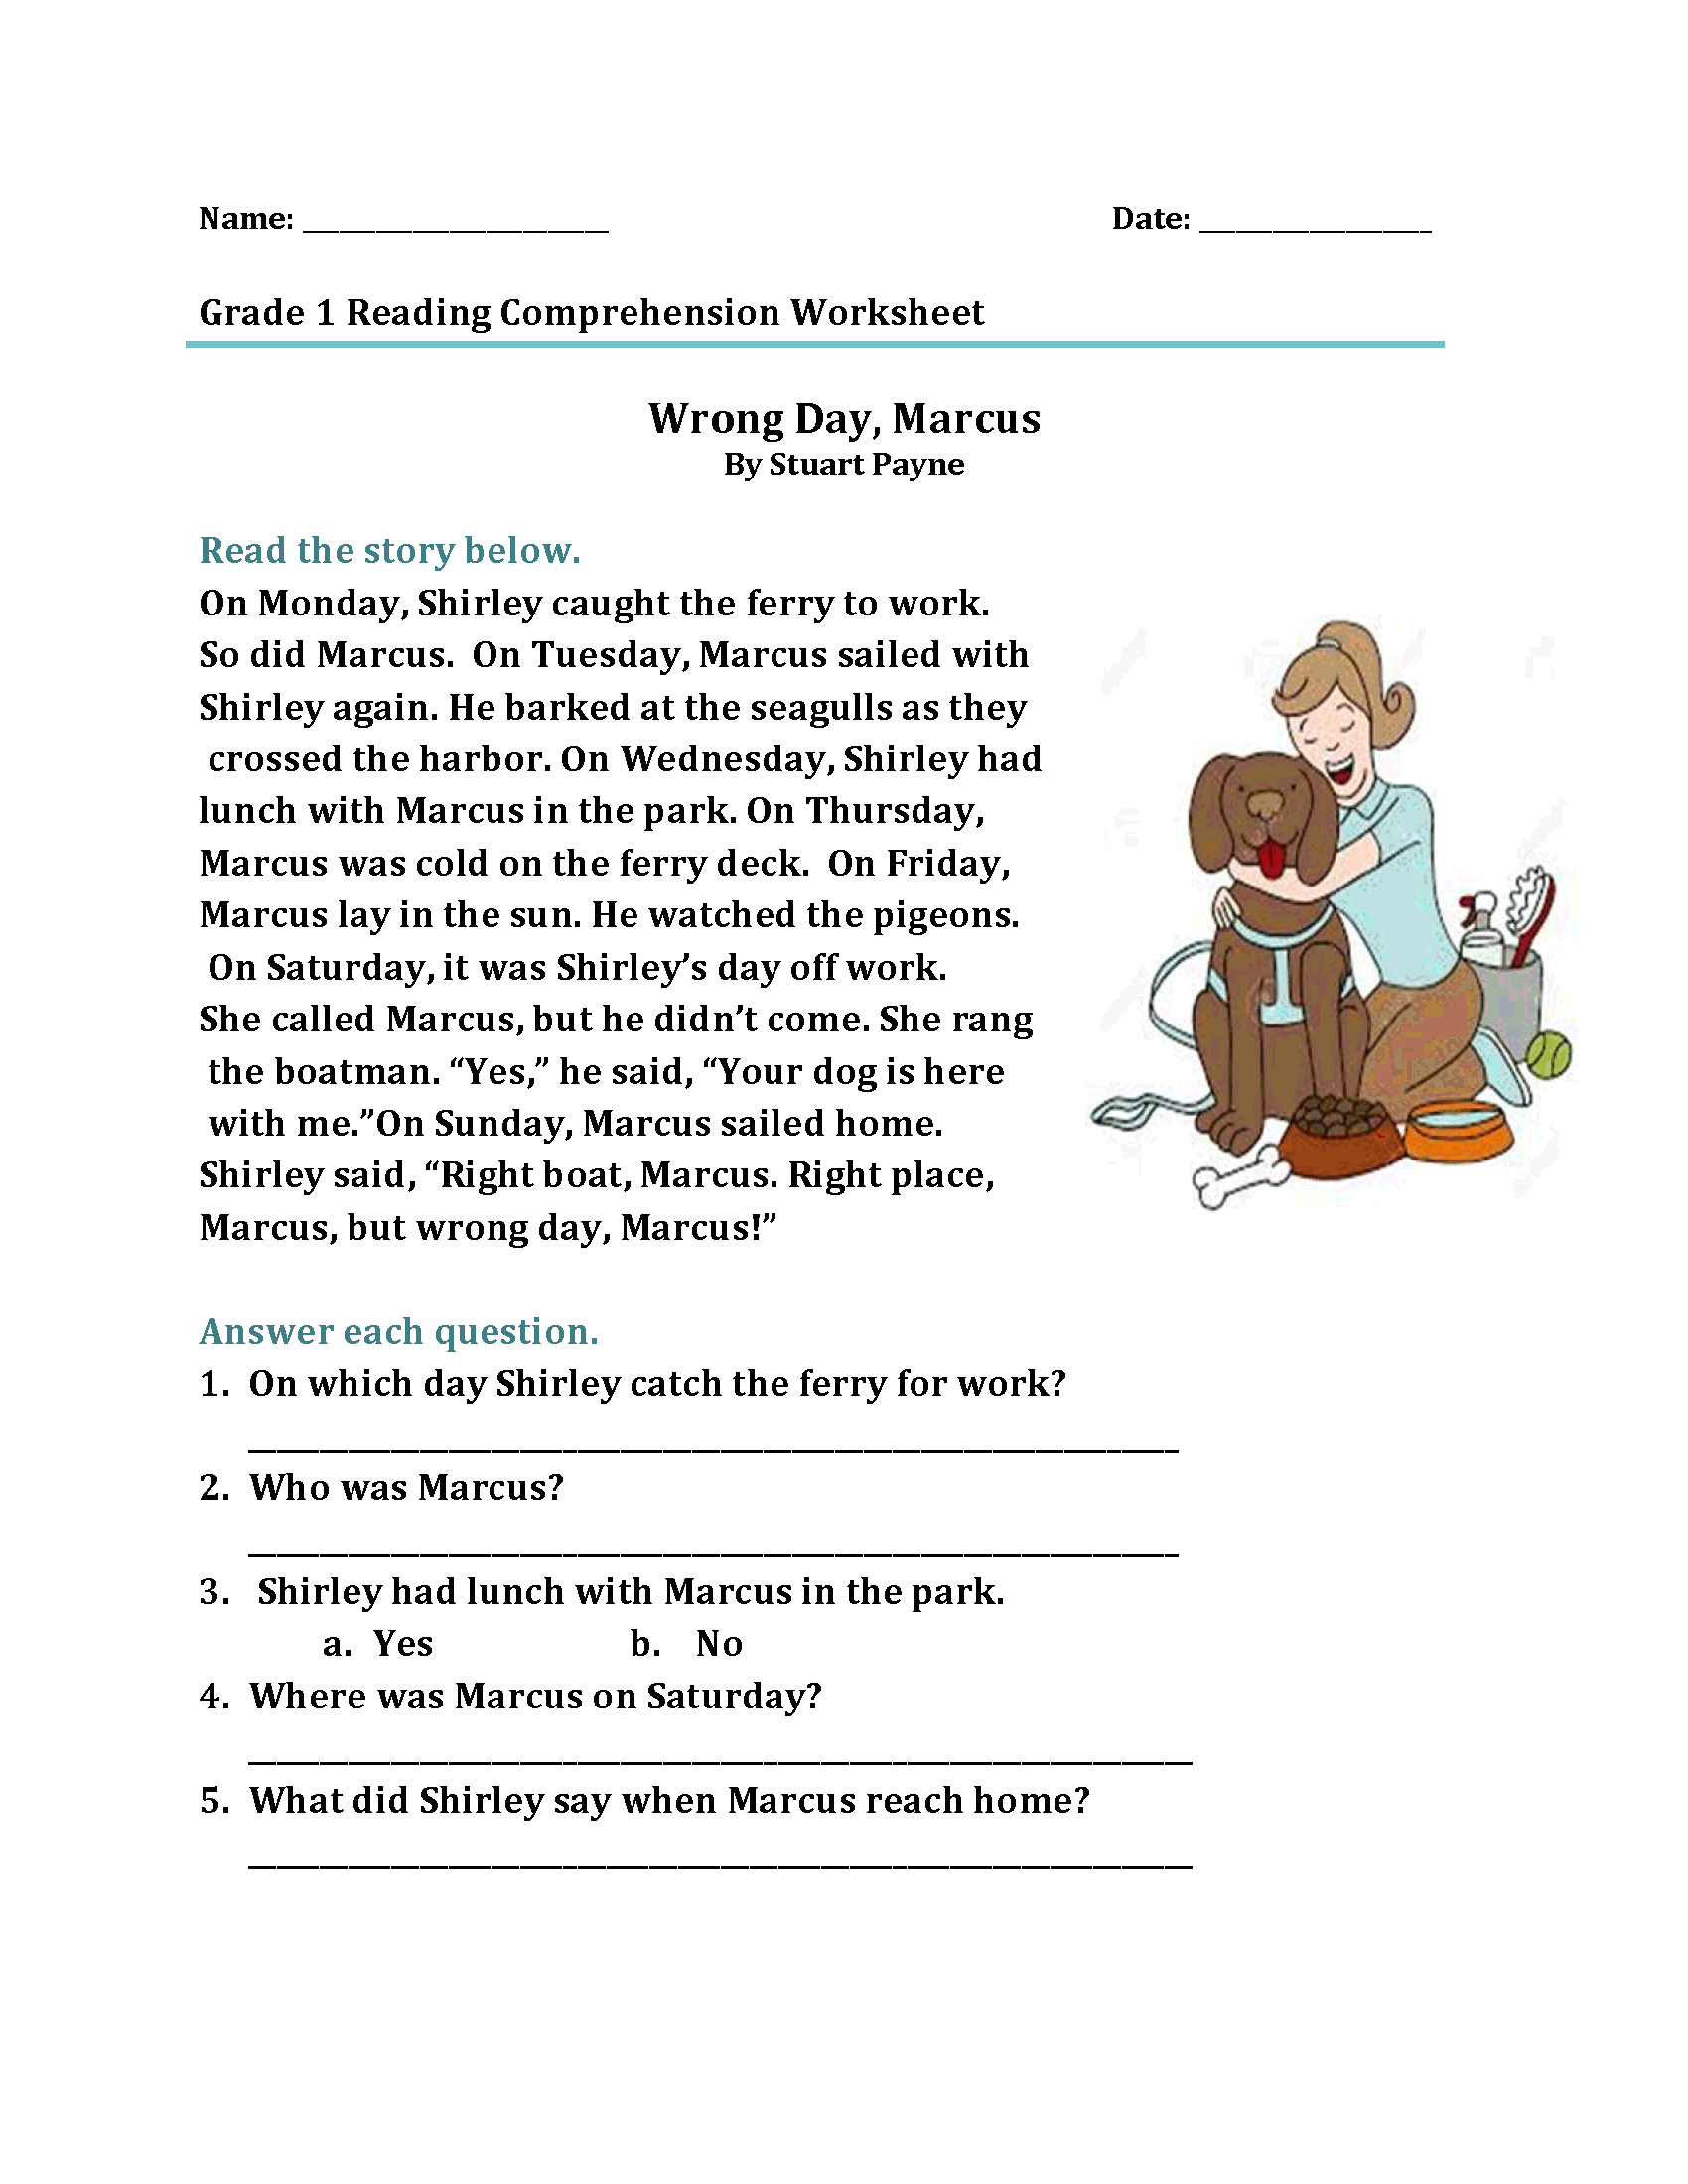 Free Reading Comprehension Worksheets 6th Grade